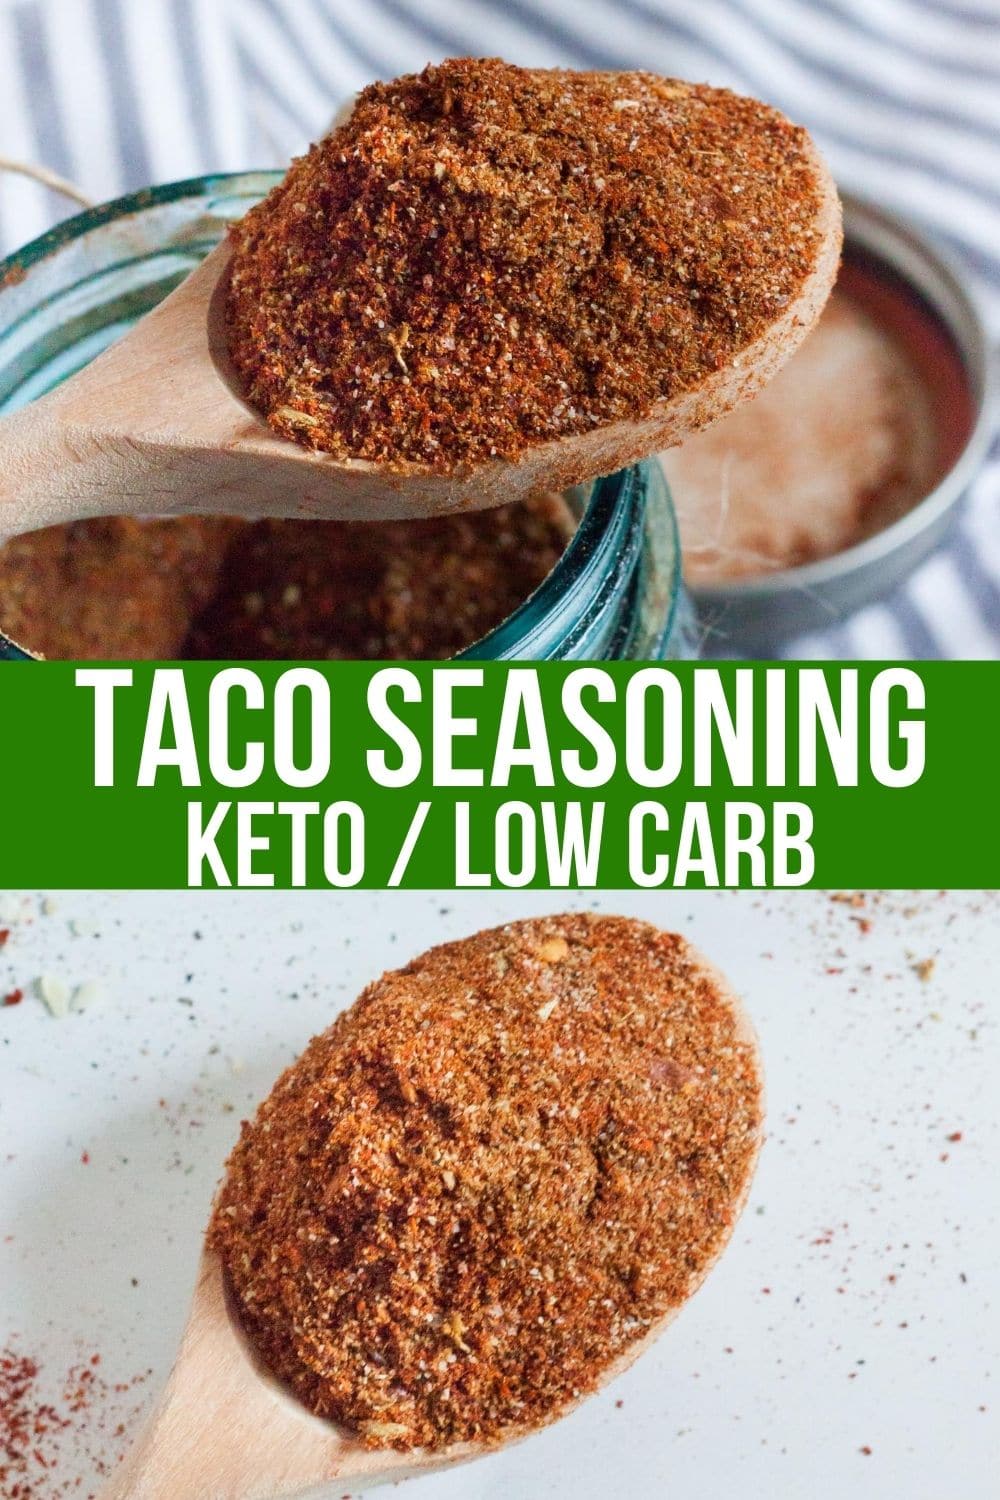 mason jar of taco seasoning keto with a wooden spoon on top